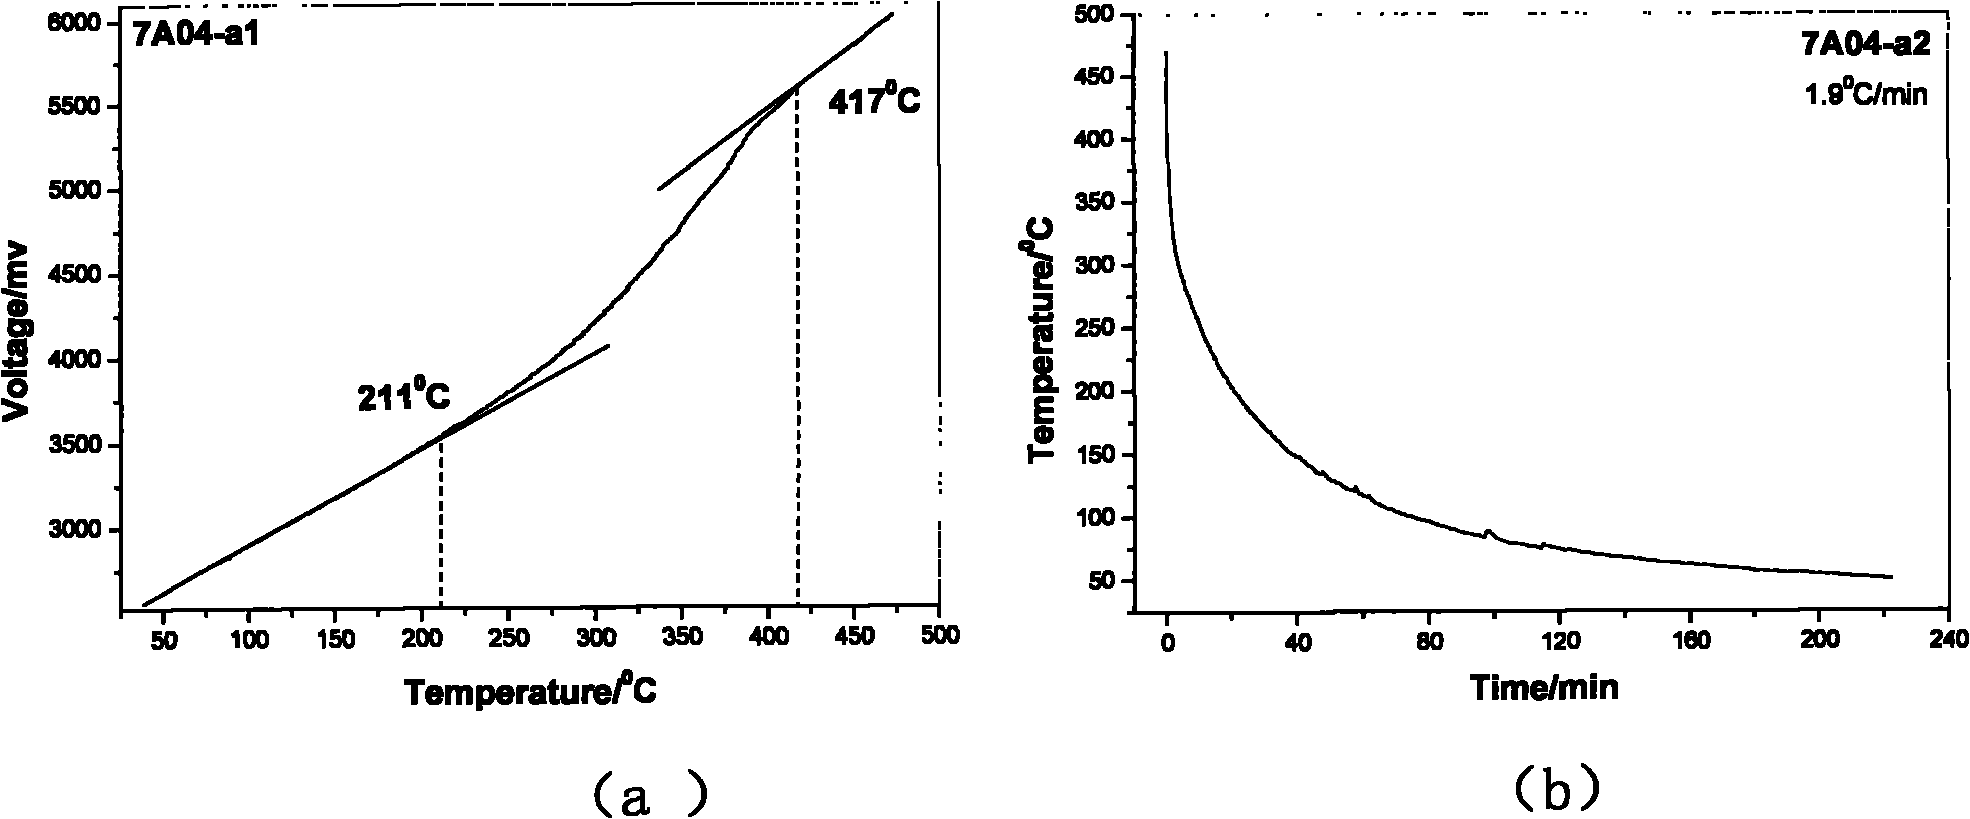 Measuring method of aluminum alloy CCT (Continuous Cooling Transformation) diagram